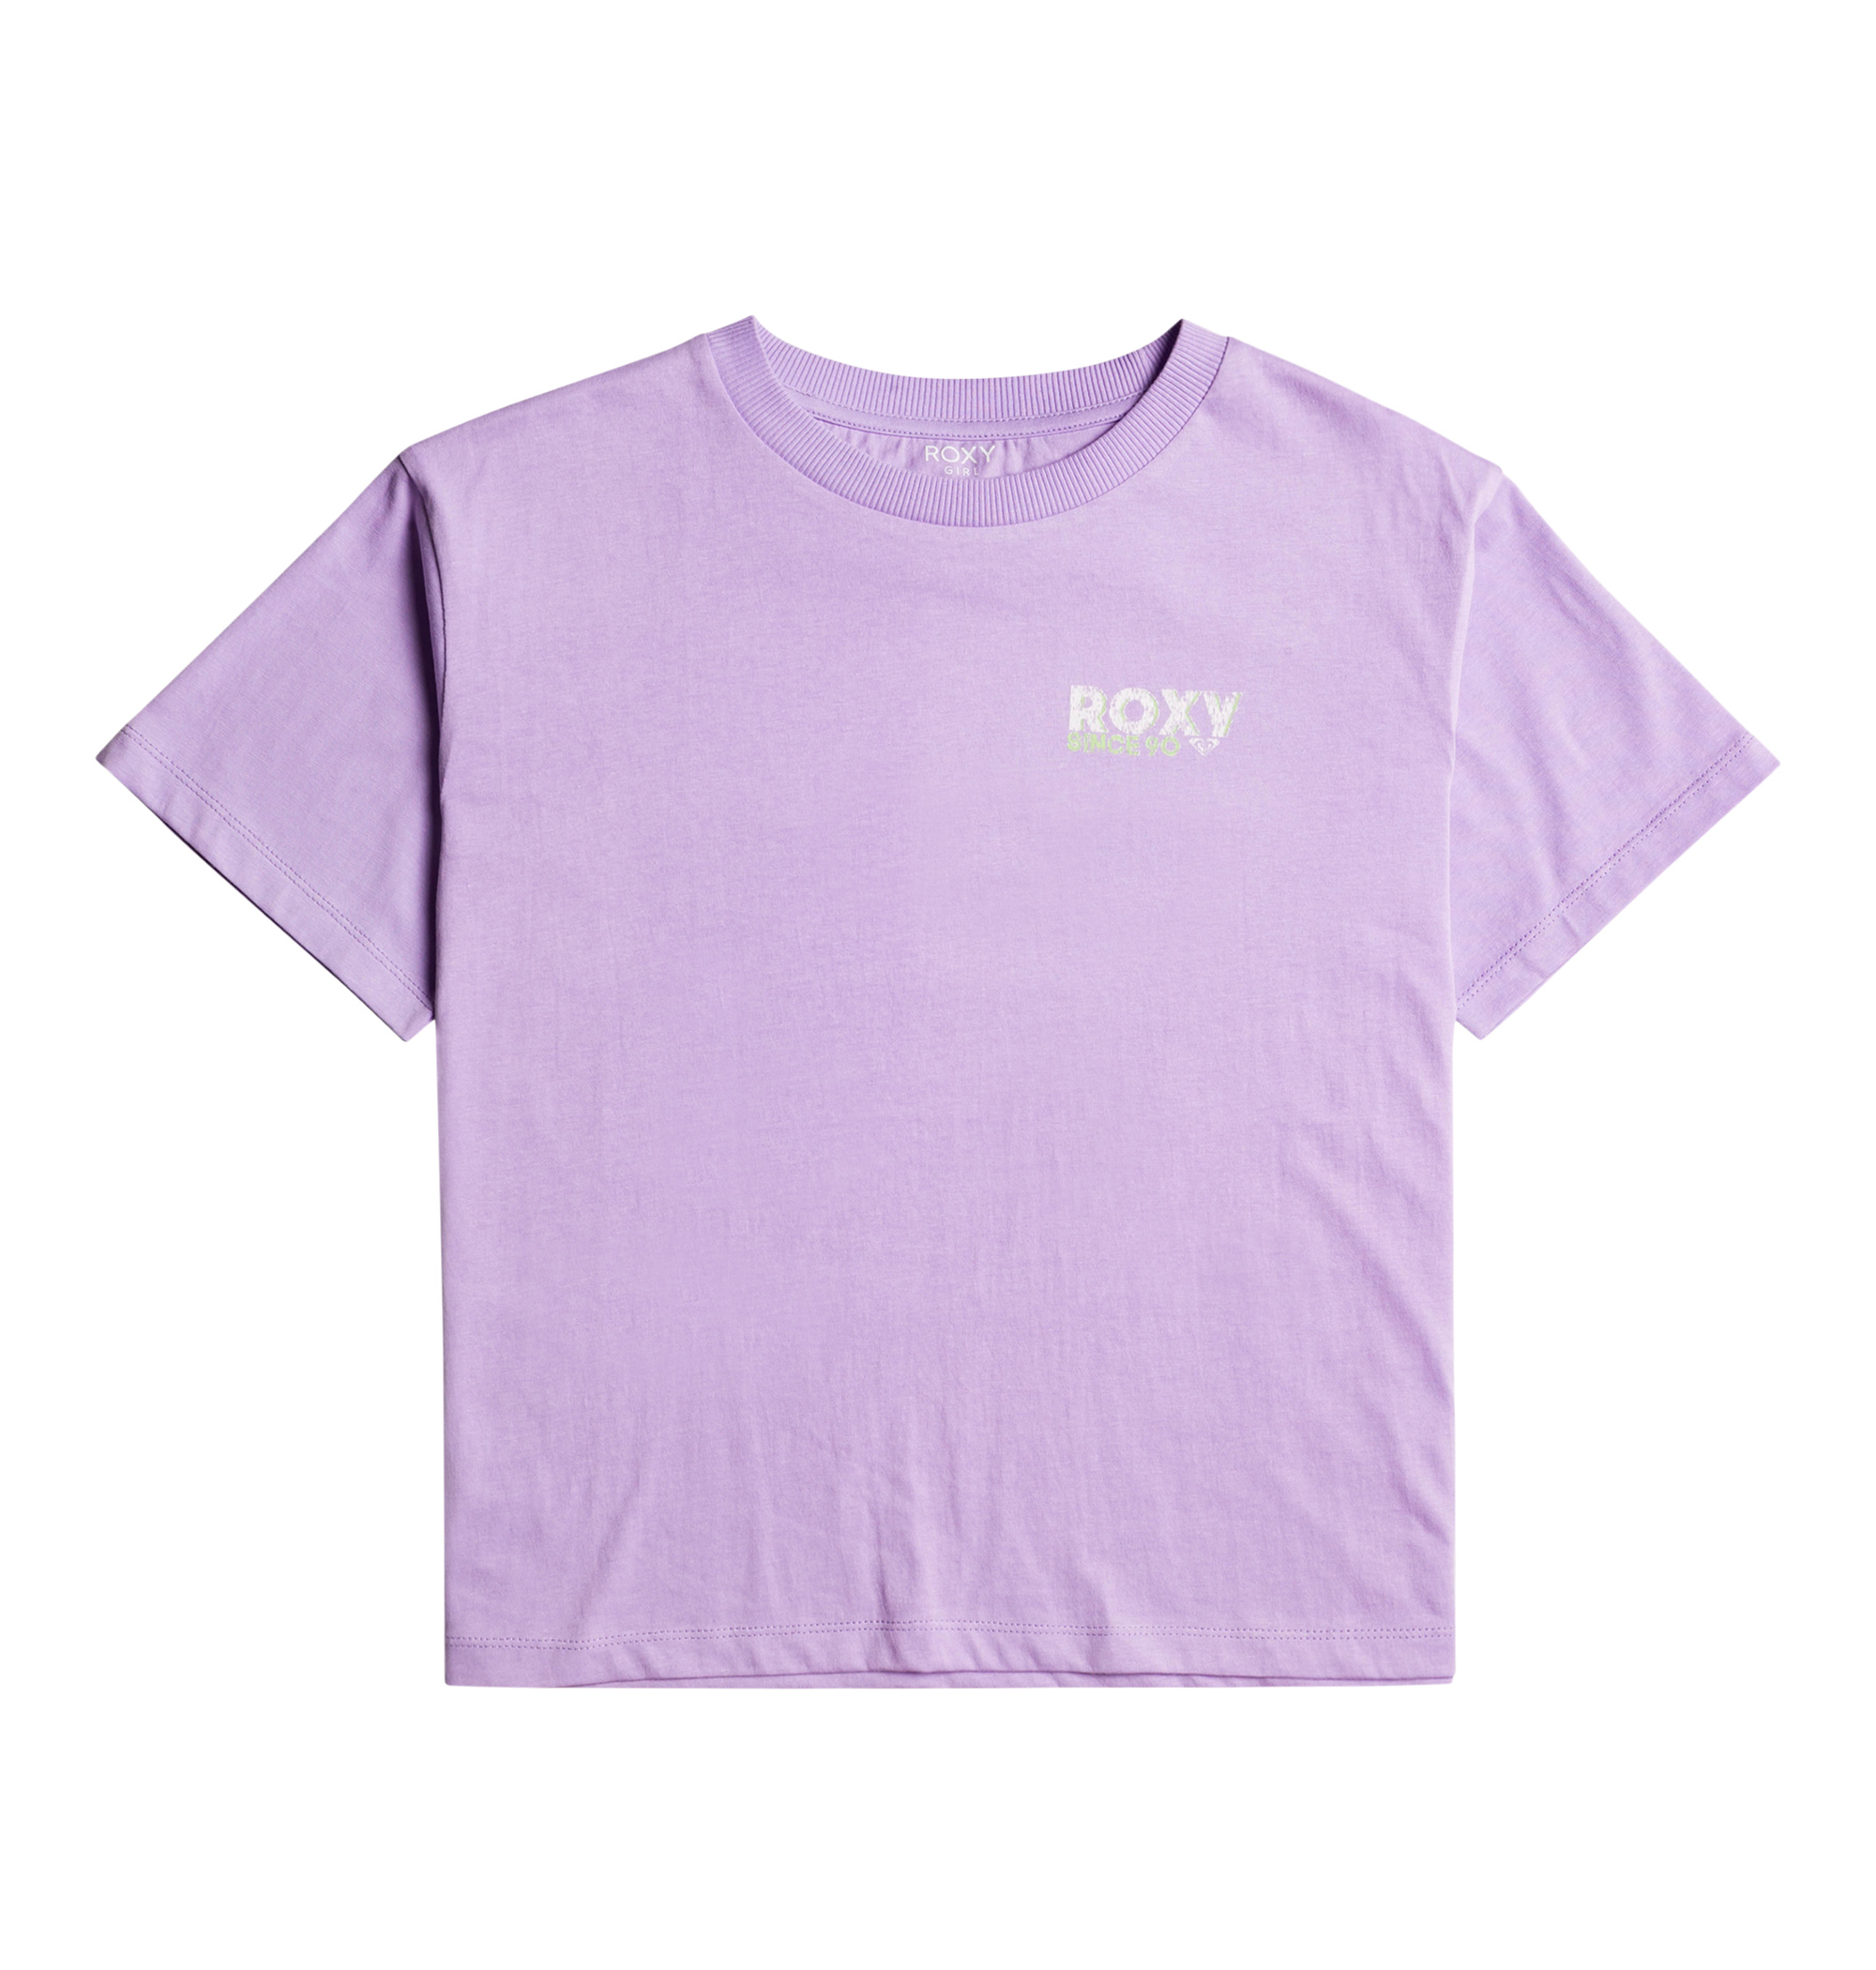 30%OFF セール SALE Roxy ロキシー キッズ GONE TO CALIFORNIA Tシャツ (100-150cm) Tシャツ ティーシャツ